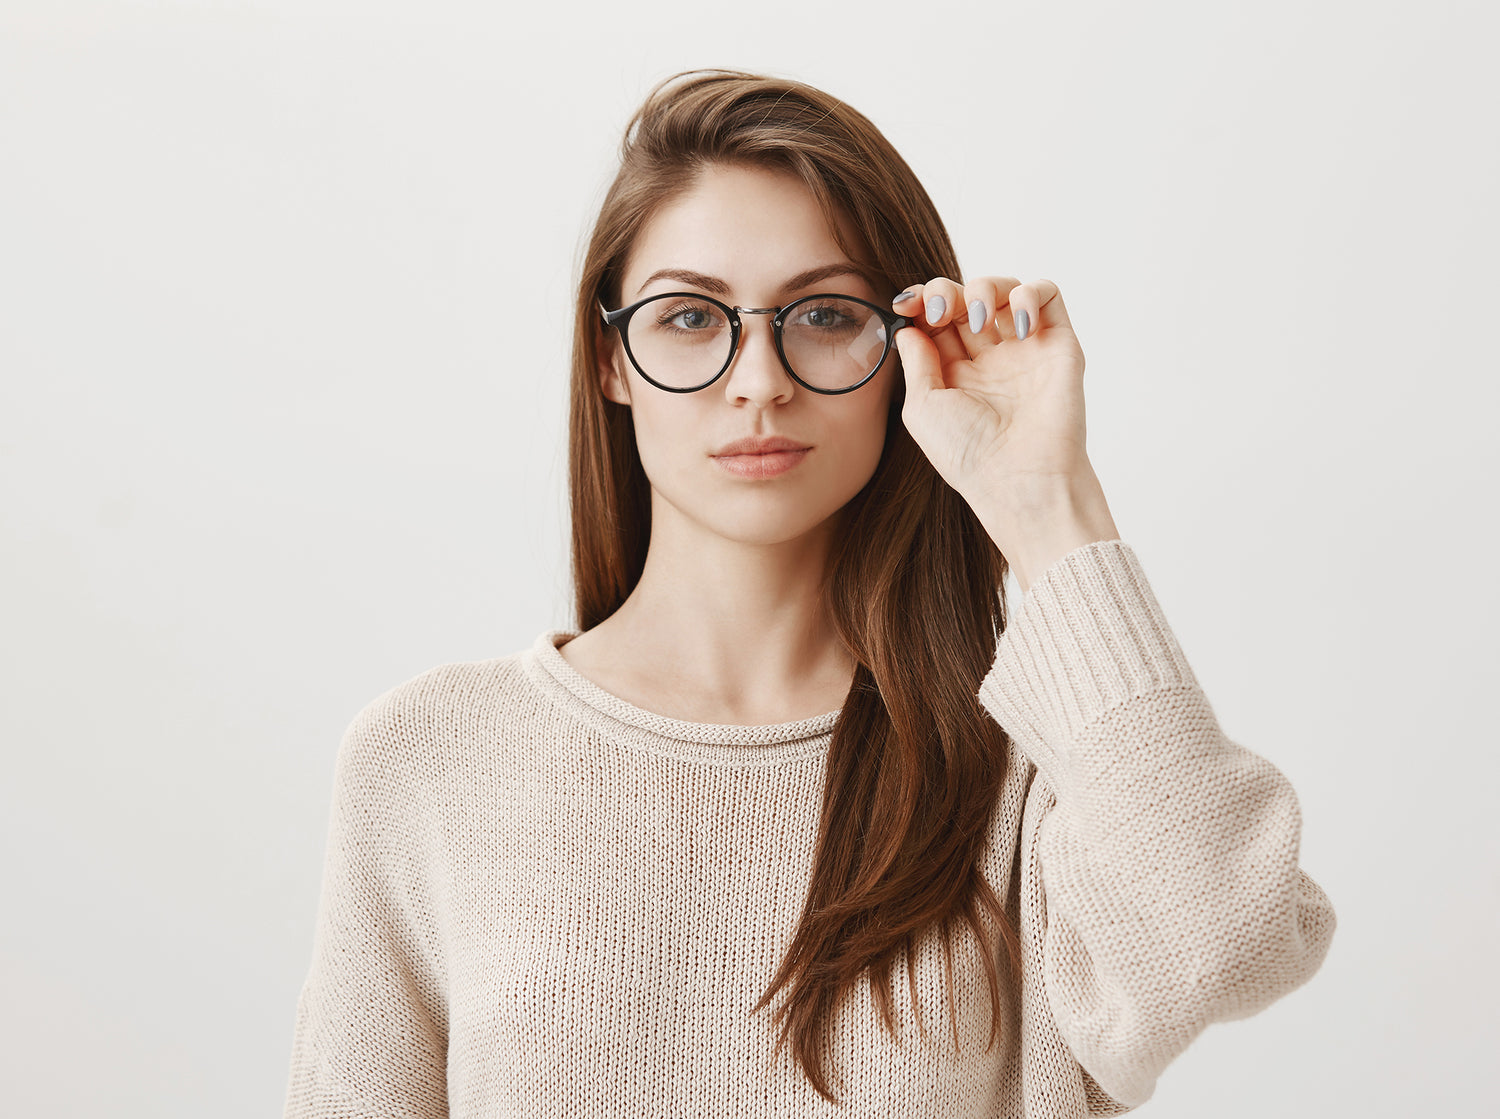 Buy Glasses Online With Insurance | Overnight Glasses